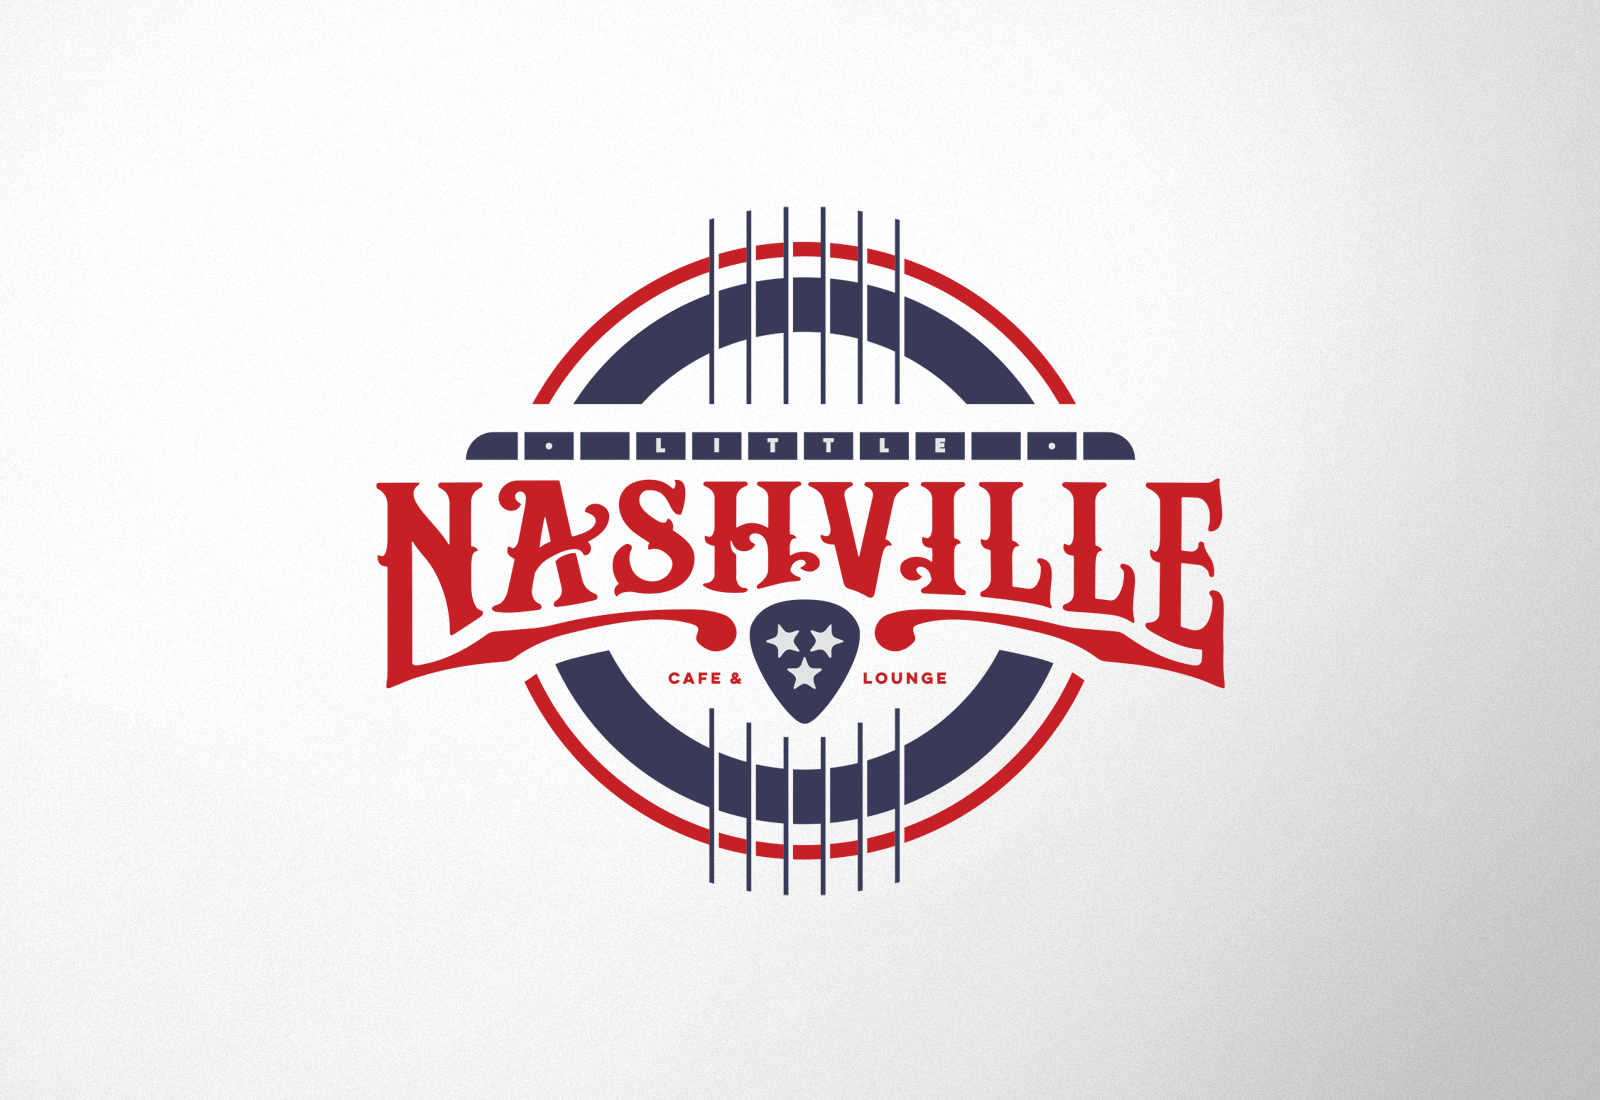 Little Nashville Music Venue Logo Design